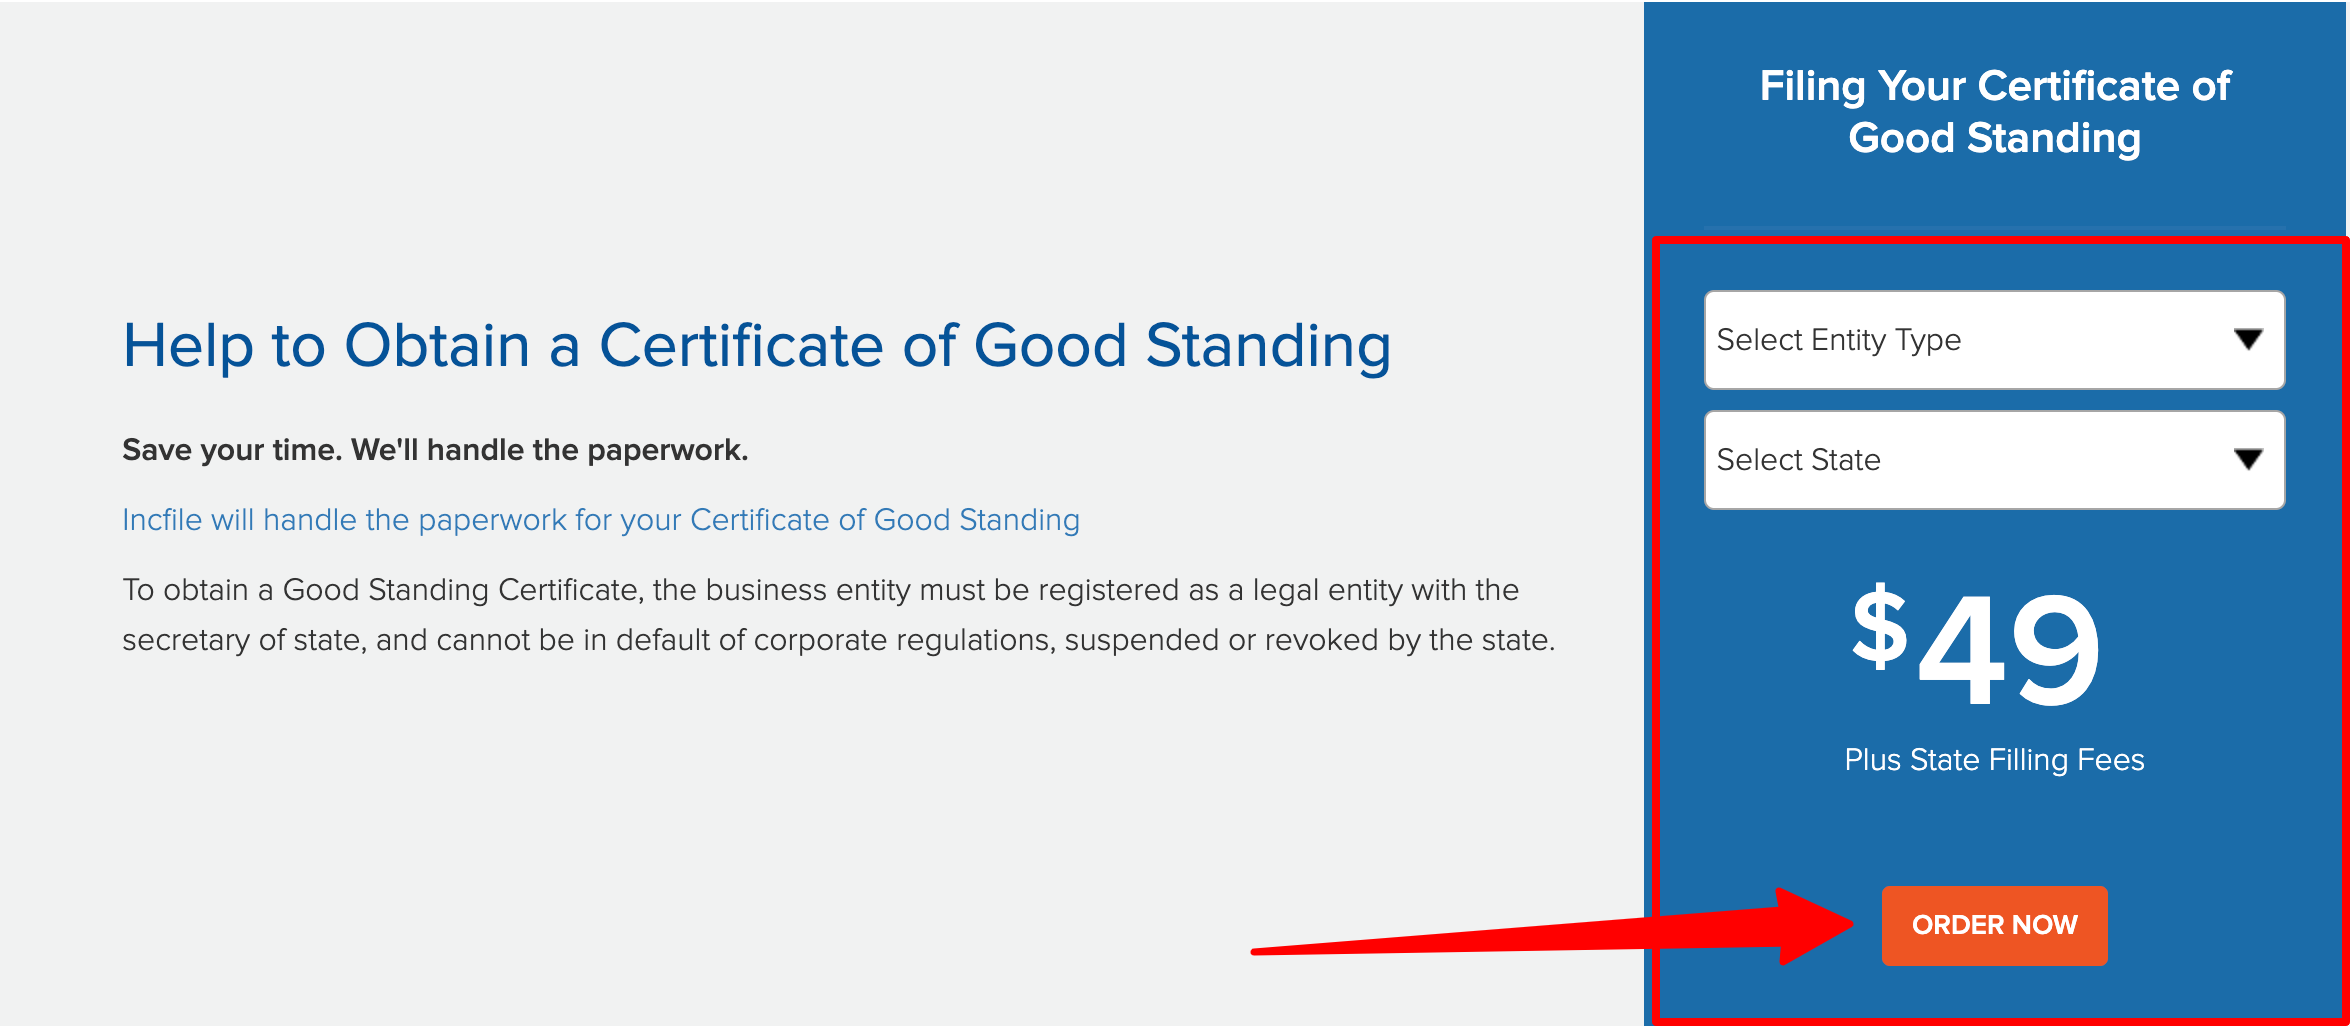 Certificate of Good Standing